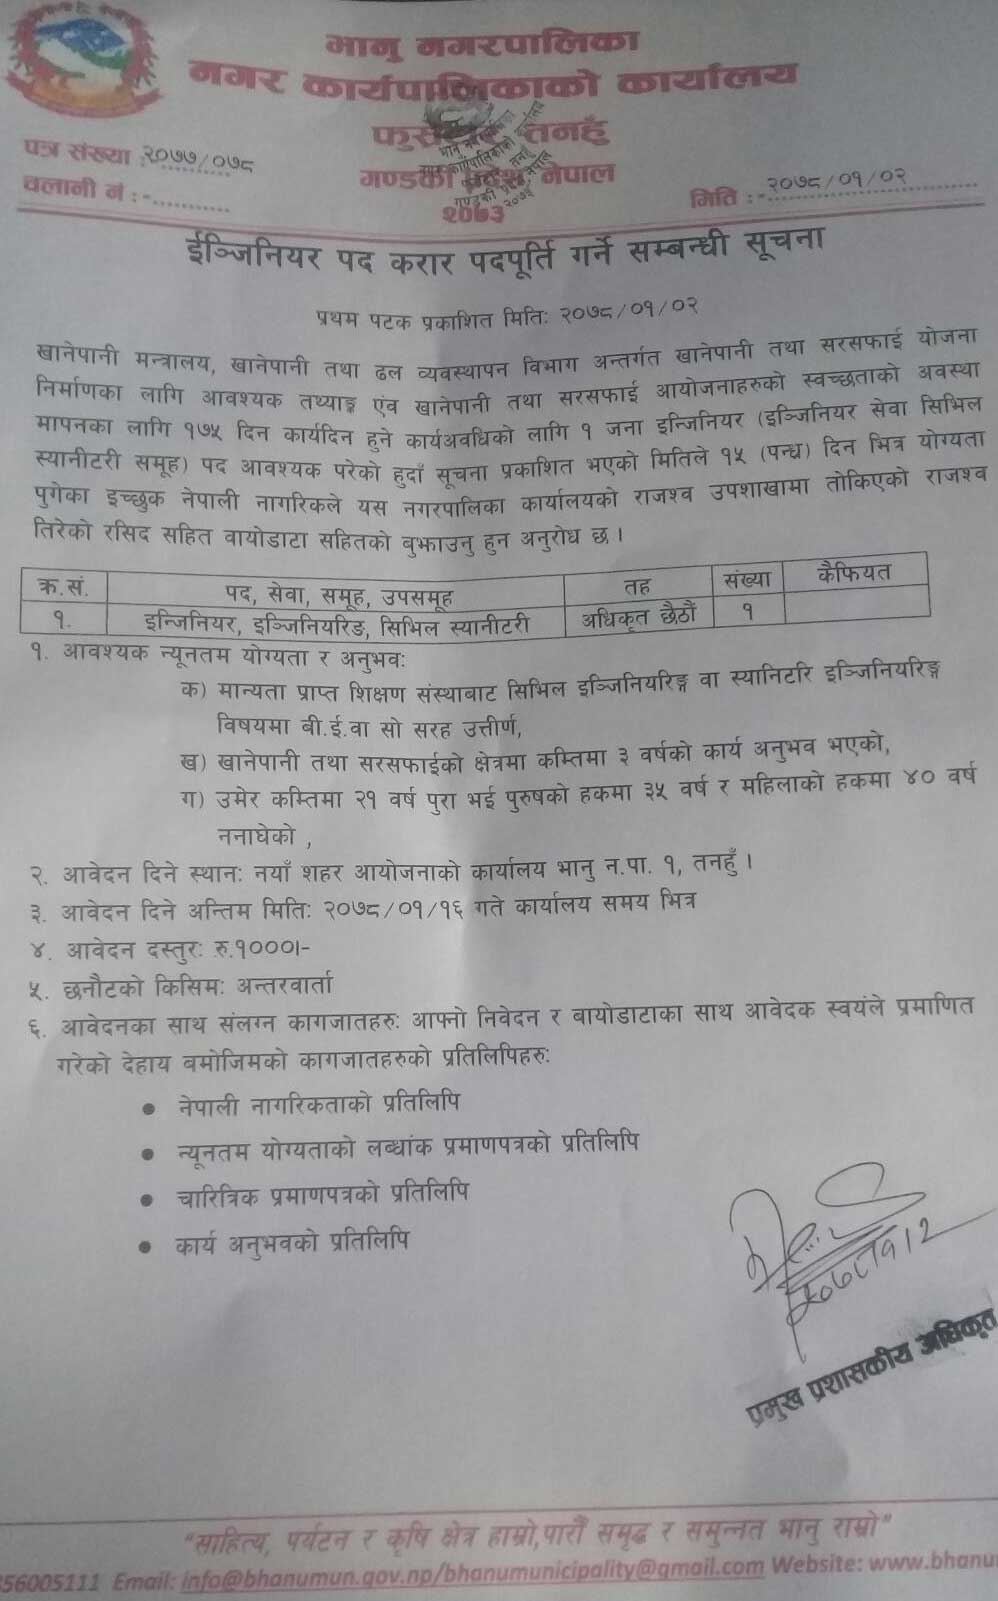 Bhanu Municipality Vacancy for Civil Engineer